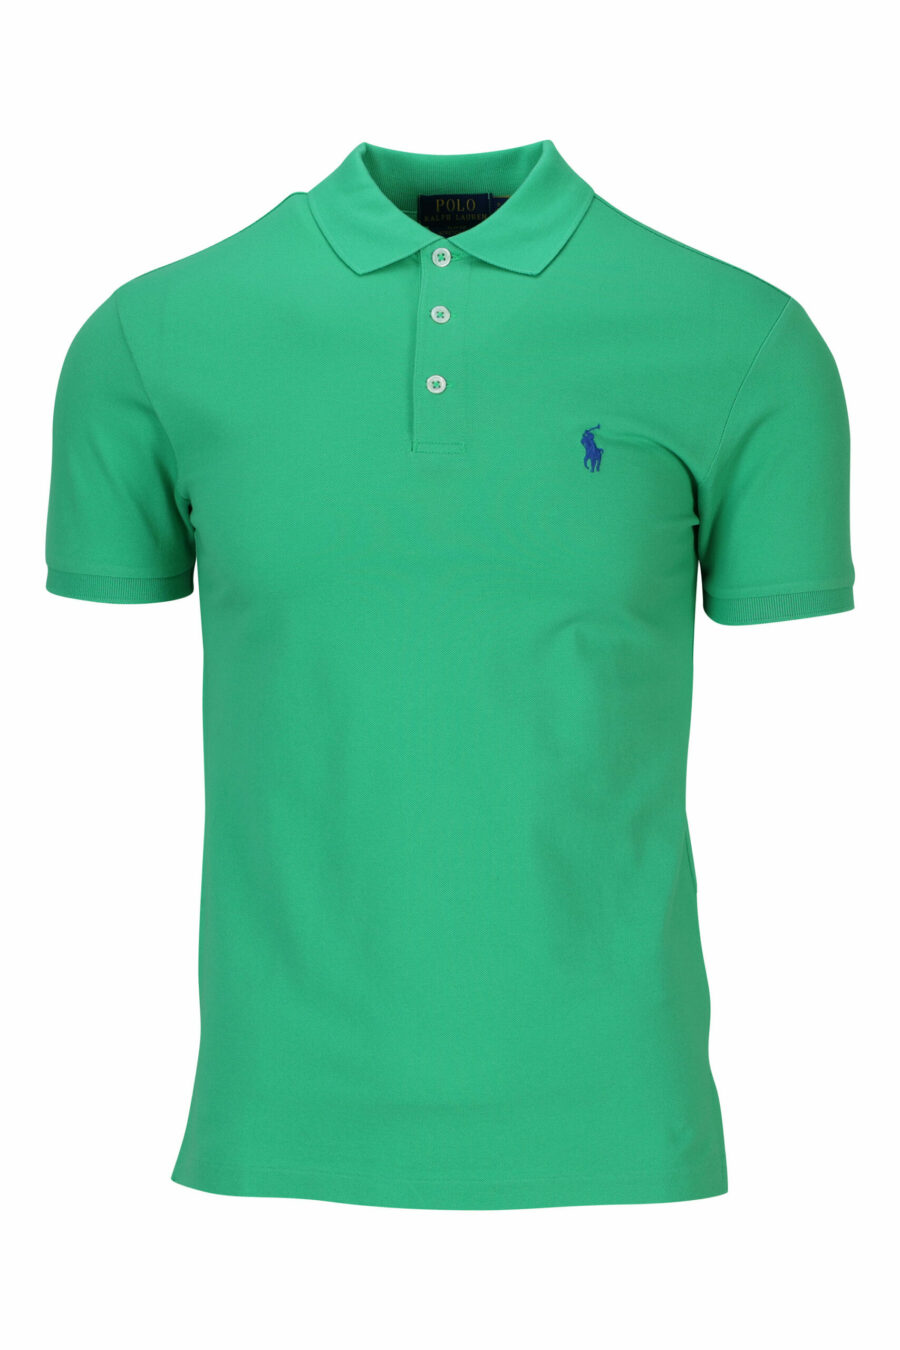 Camiseta verde y azul con minilogo "polo" - 3616535909687 scaled